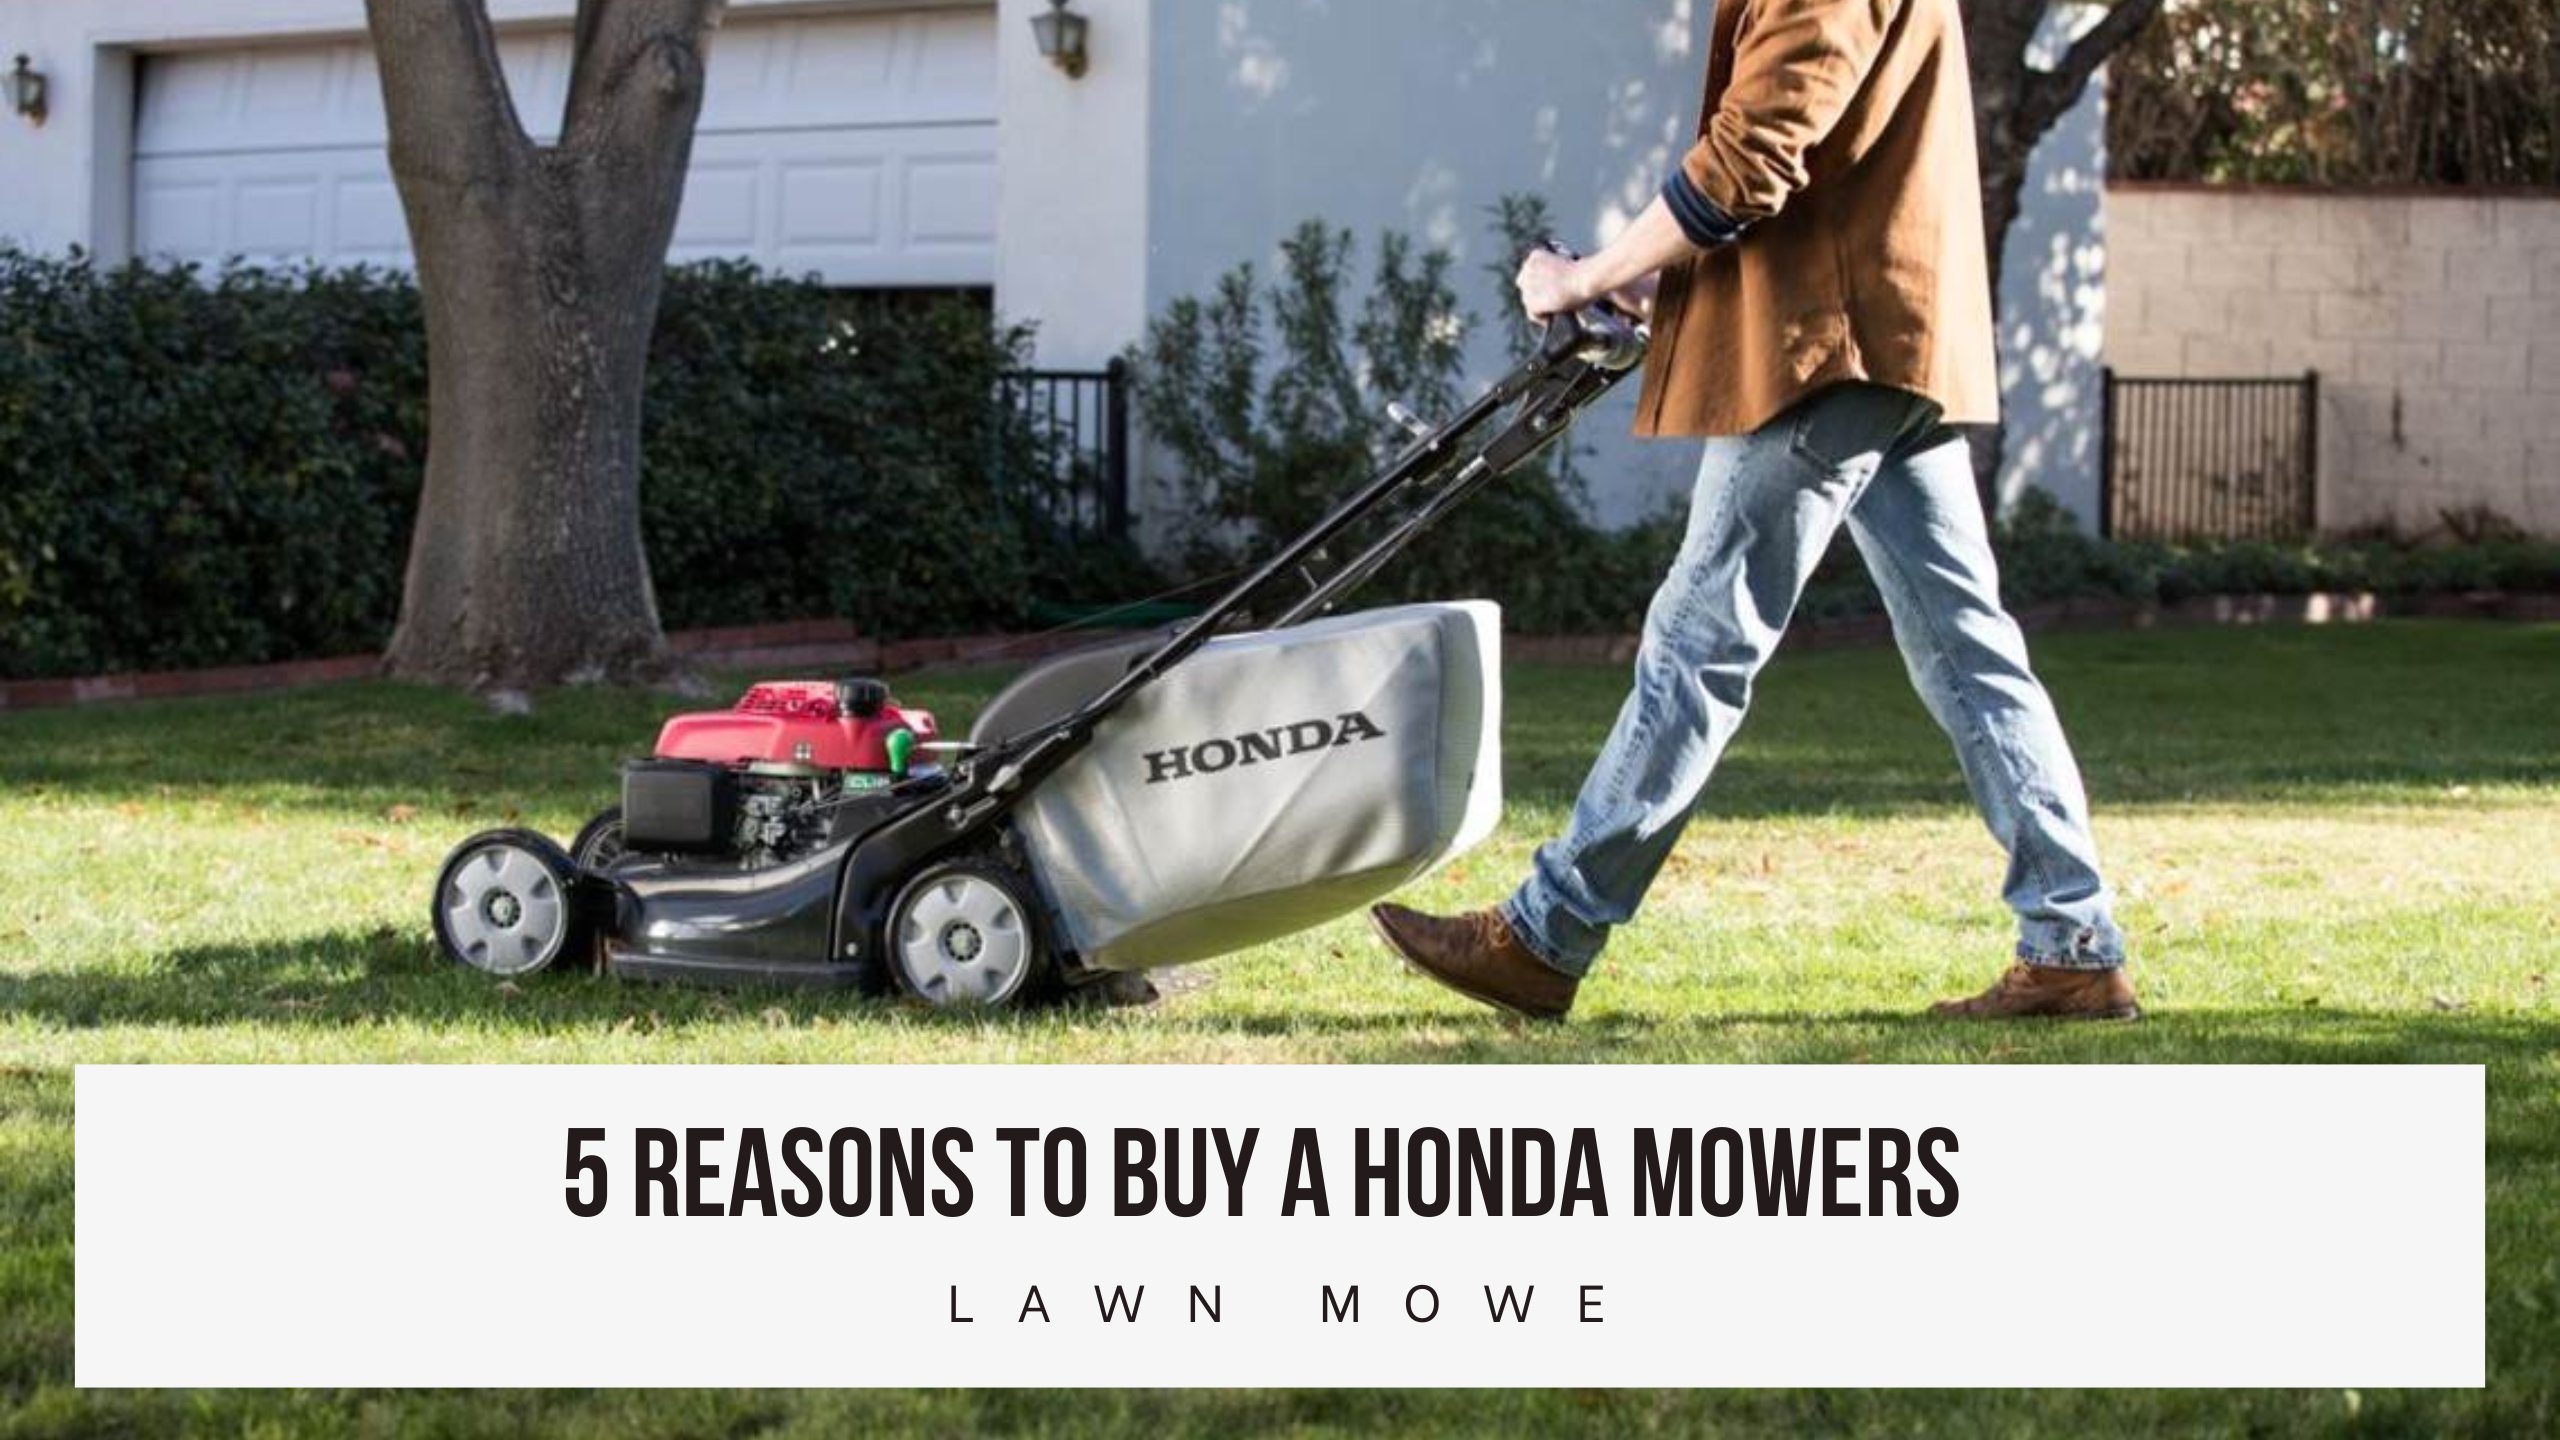 5 Reasons To Buy a Honda Mowers